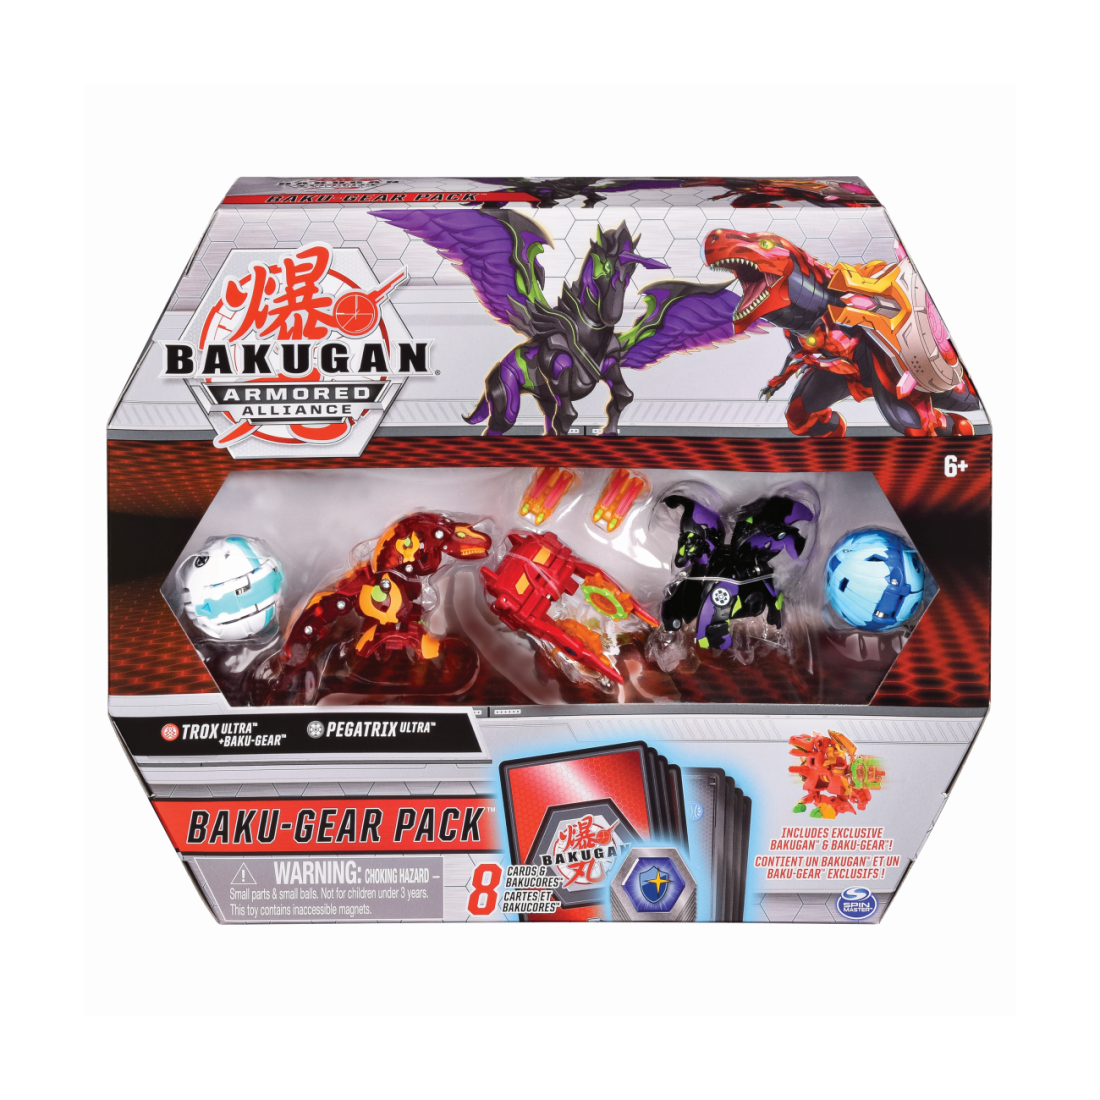 Spin Master Bakugan Armored Alliance - Baku-Gear Pack - Trox Ultra & Baku-Gear - Pegatrix Ultra